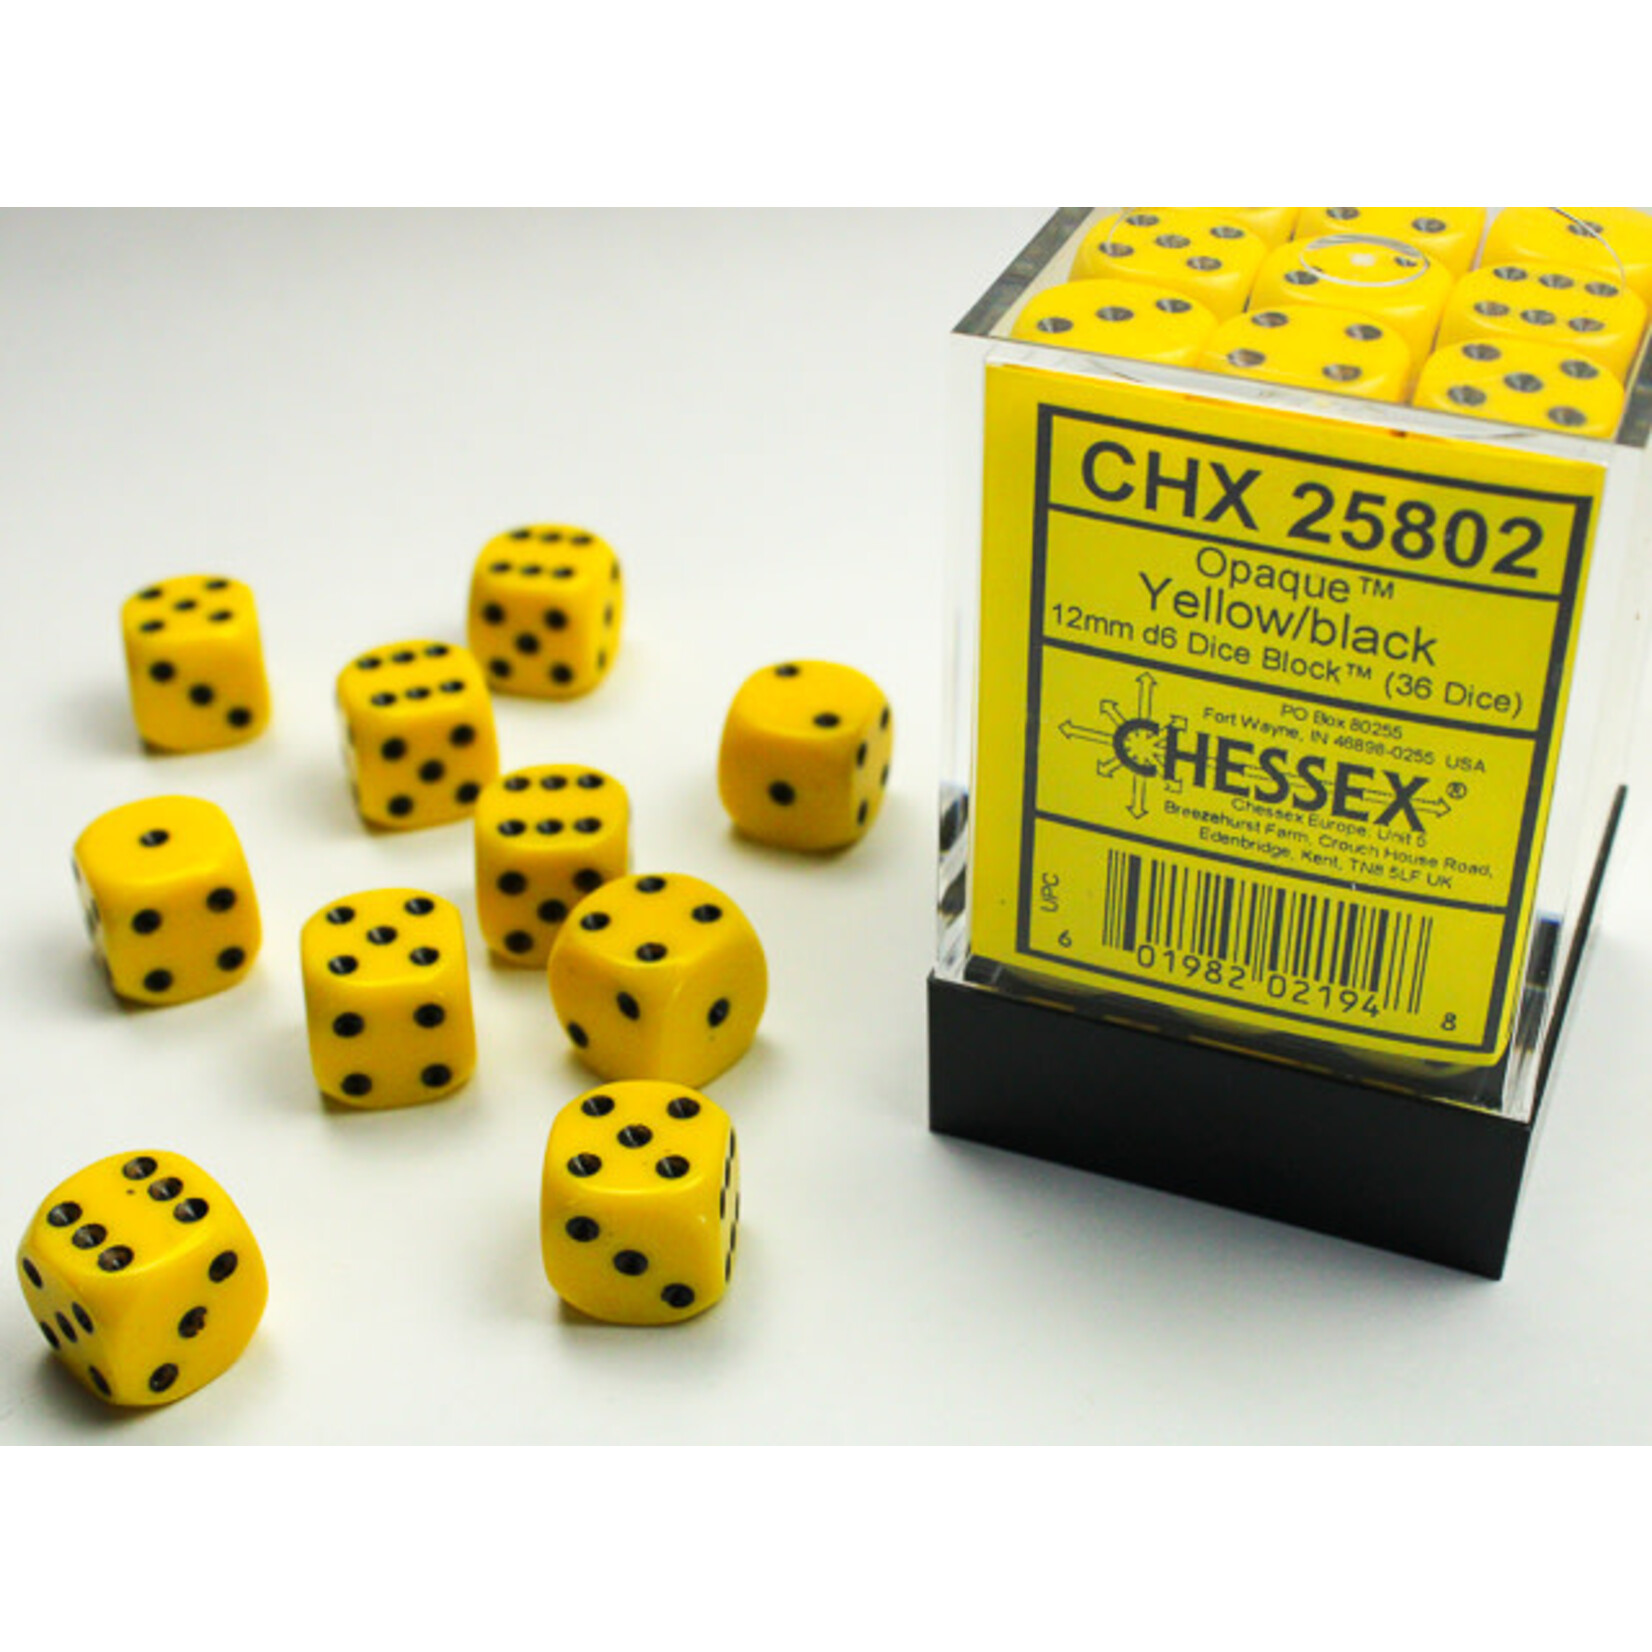 Chessex Opaque Yellow/black 12mm d6 Dice Block (36 dice)